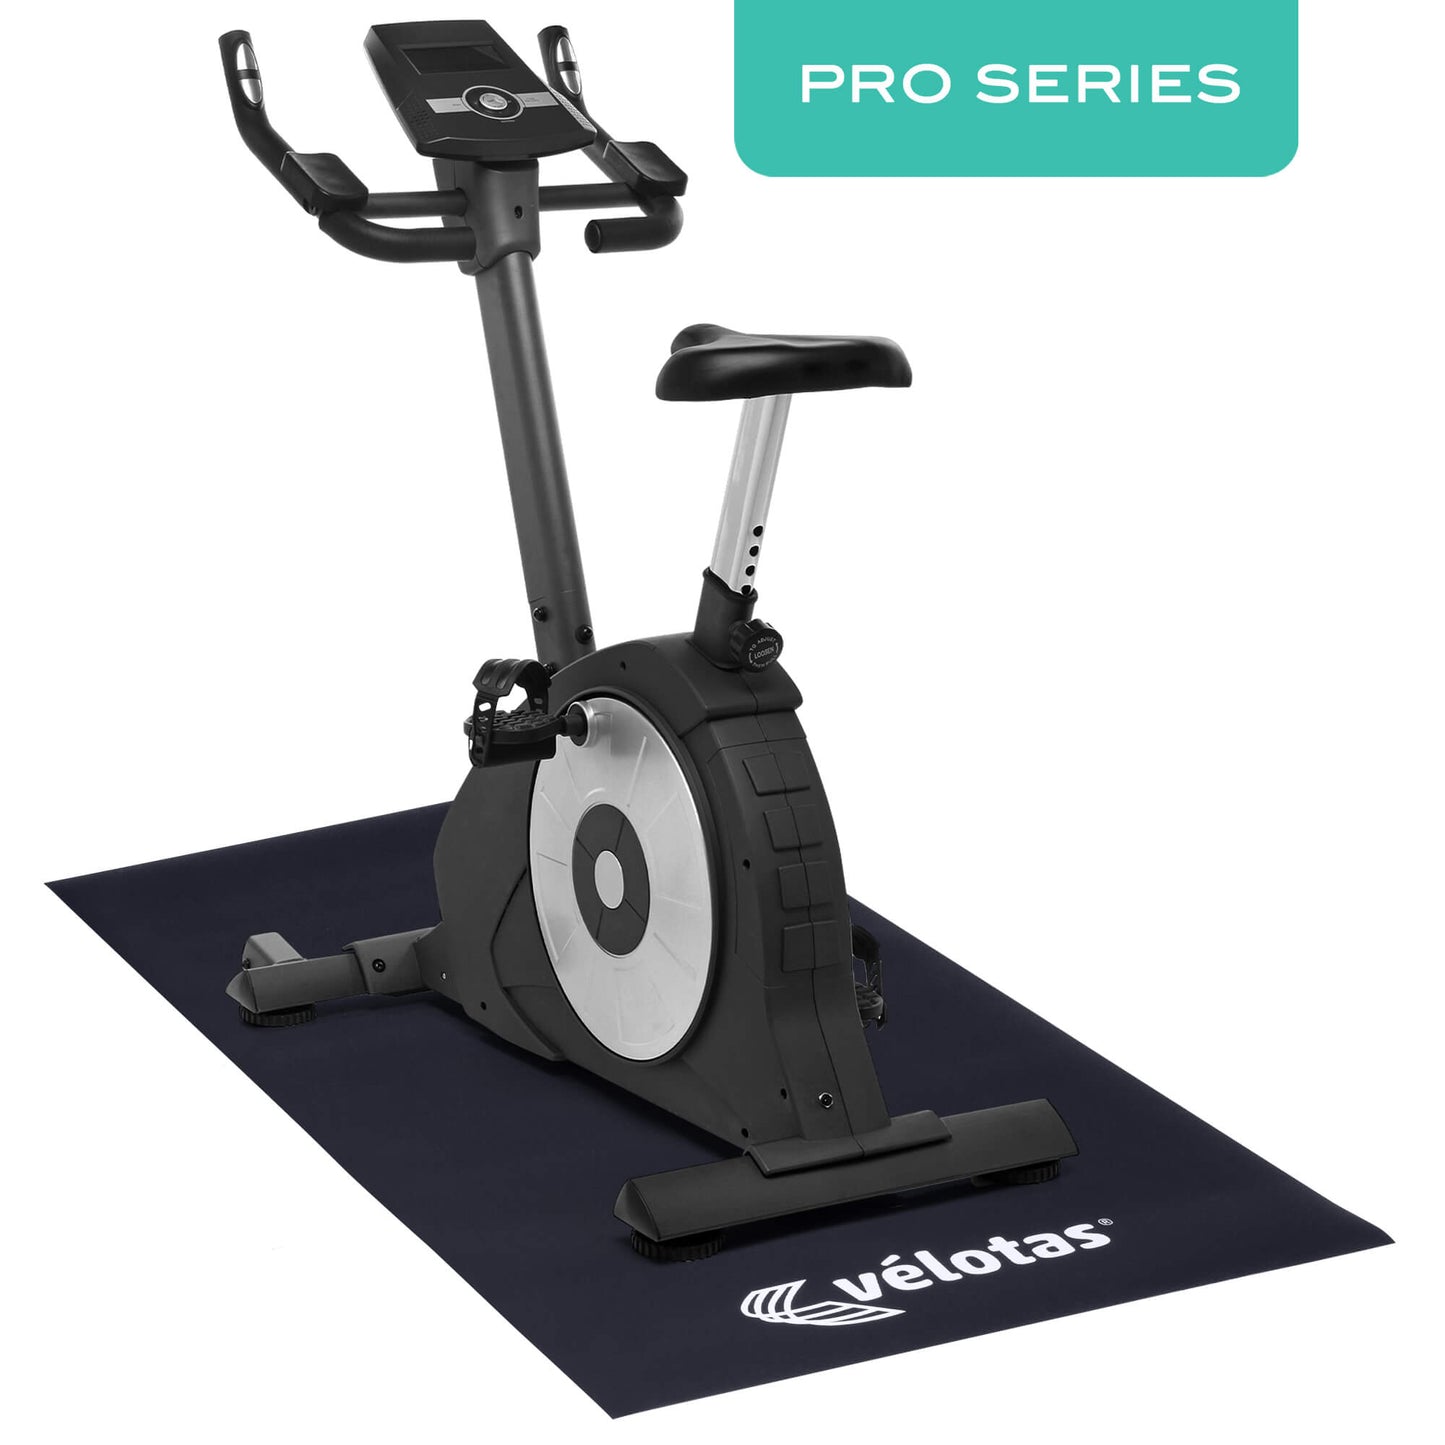 Velotas Pro fitness equipment mat in use